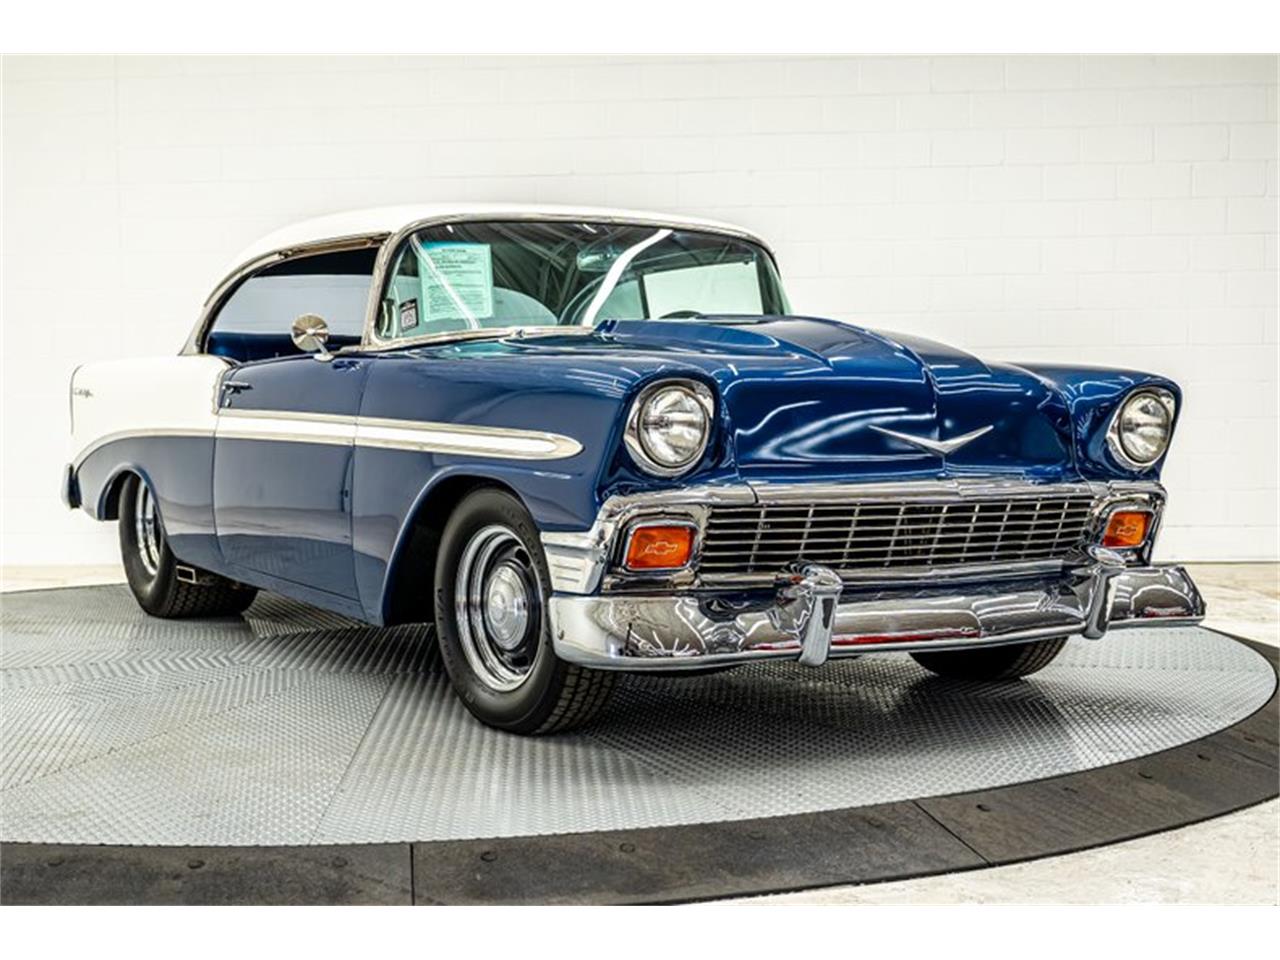 For Sale: 1956 Chevrolet Bel Air in Ventura, California for sale in Ventura, CA